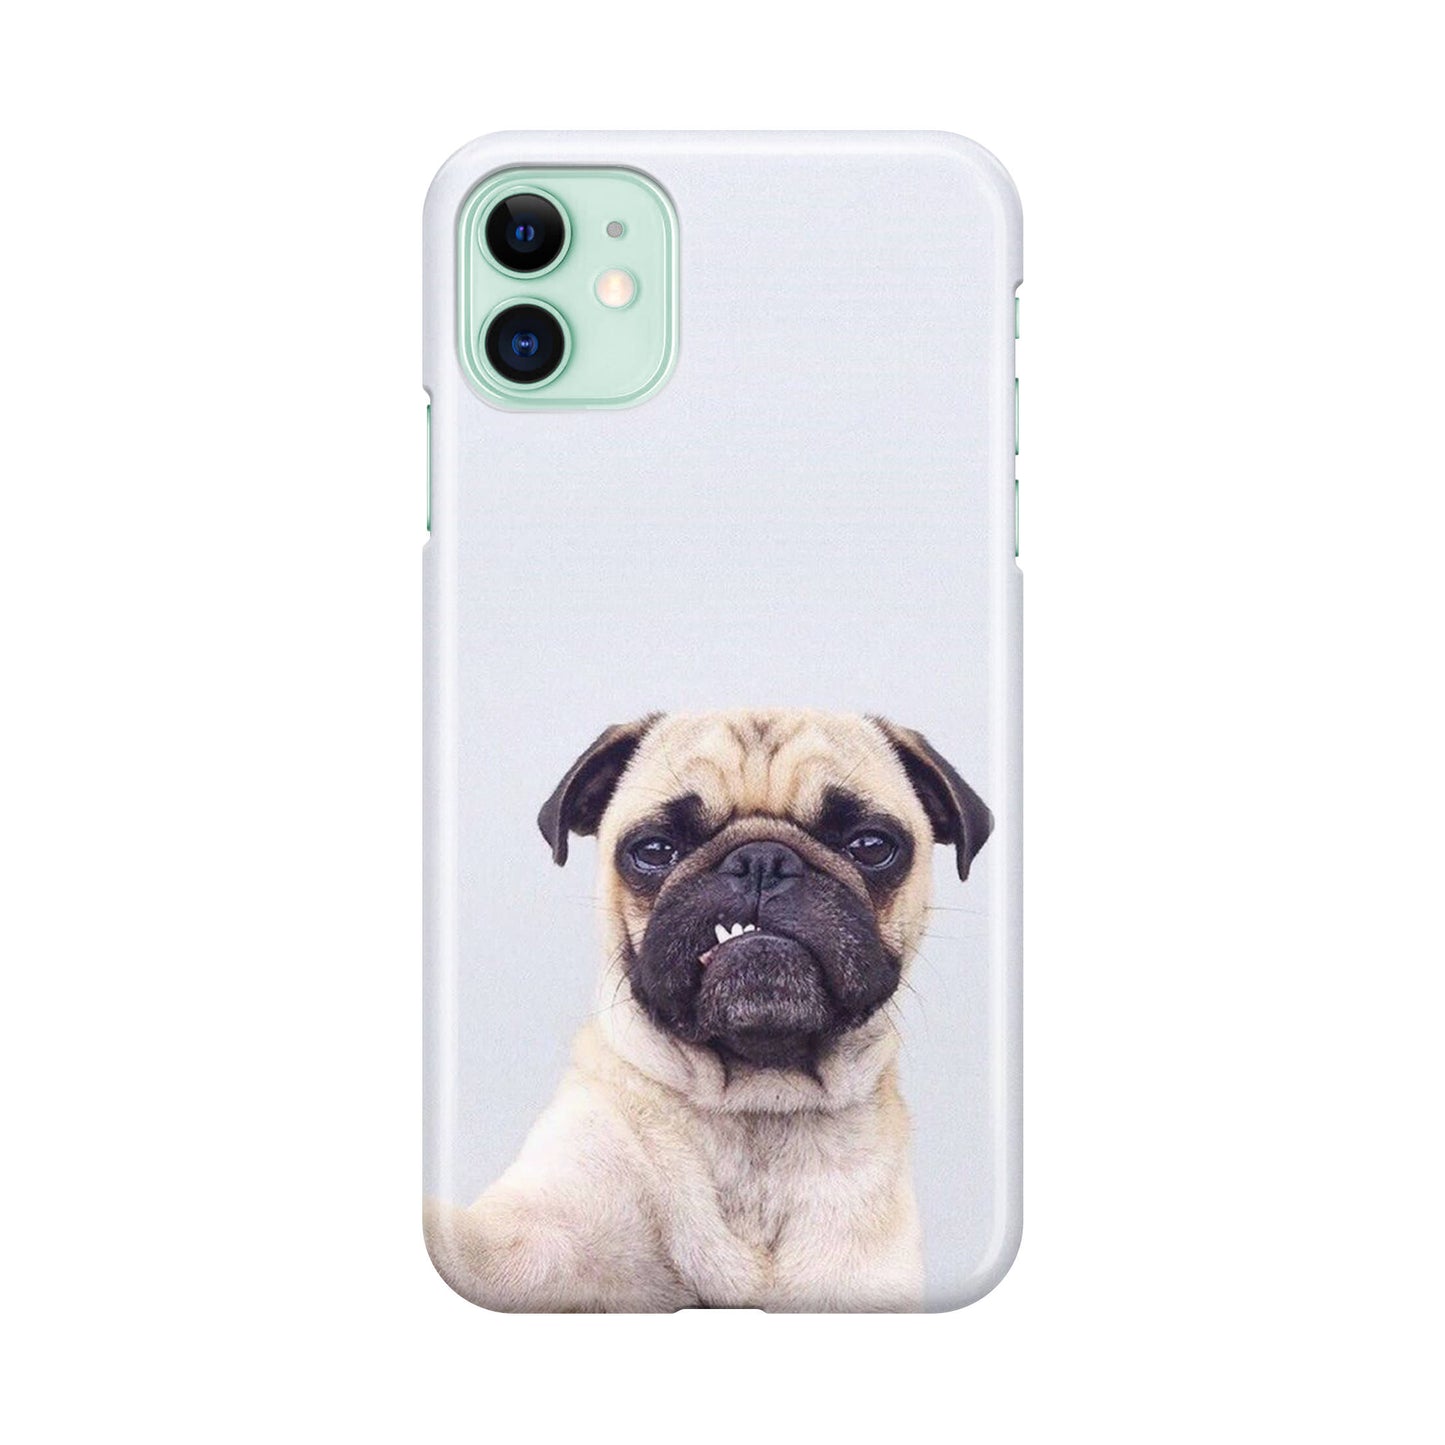 The Selfie Pug iPhone 12 mini Case